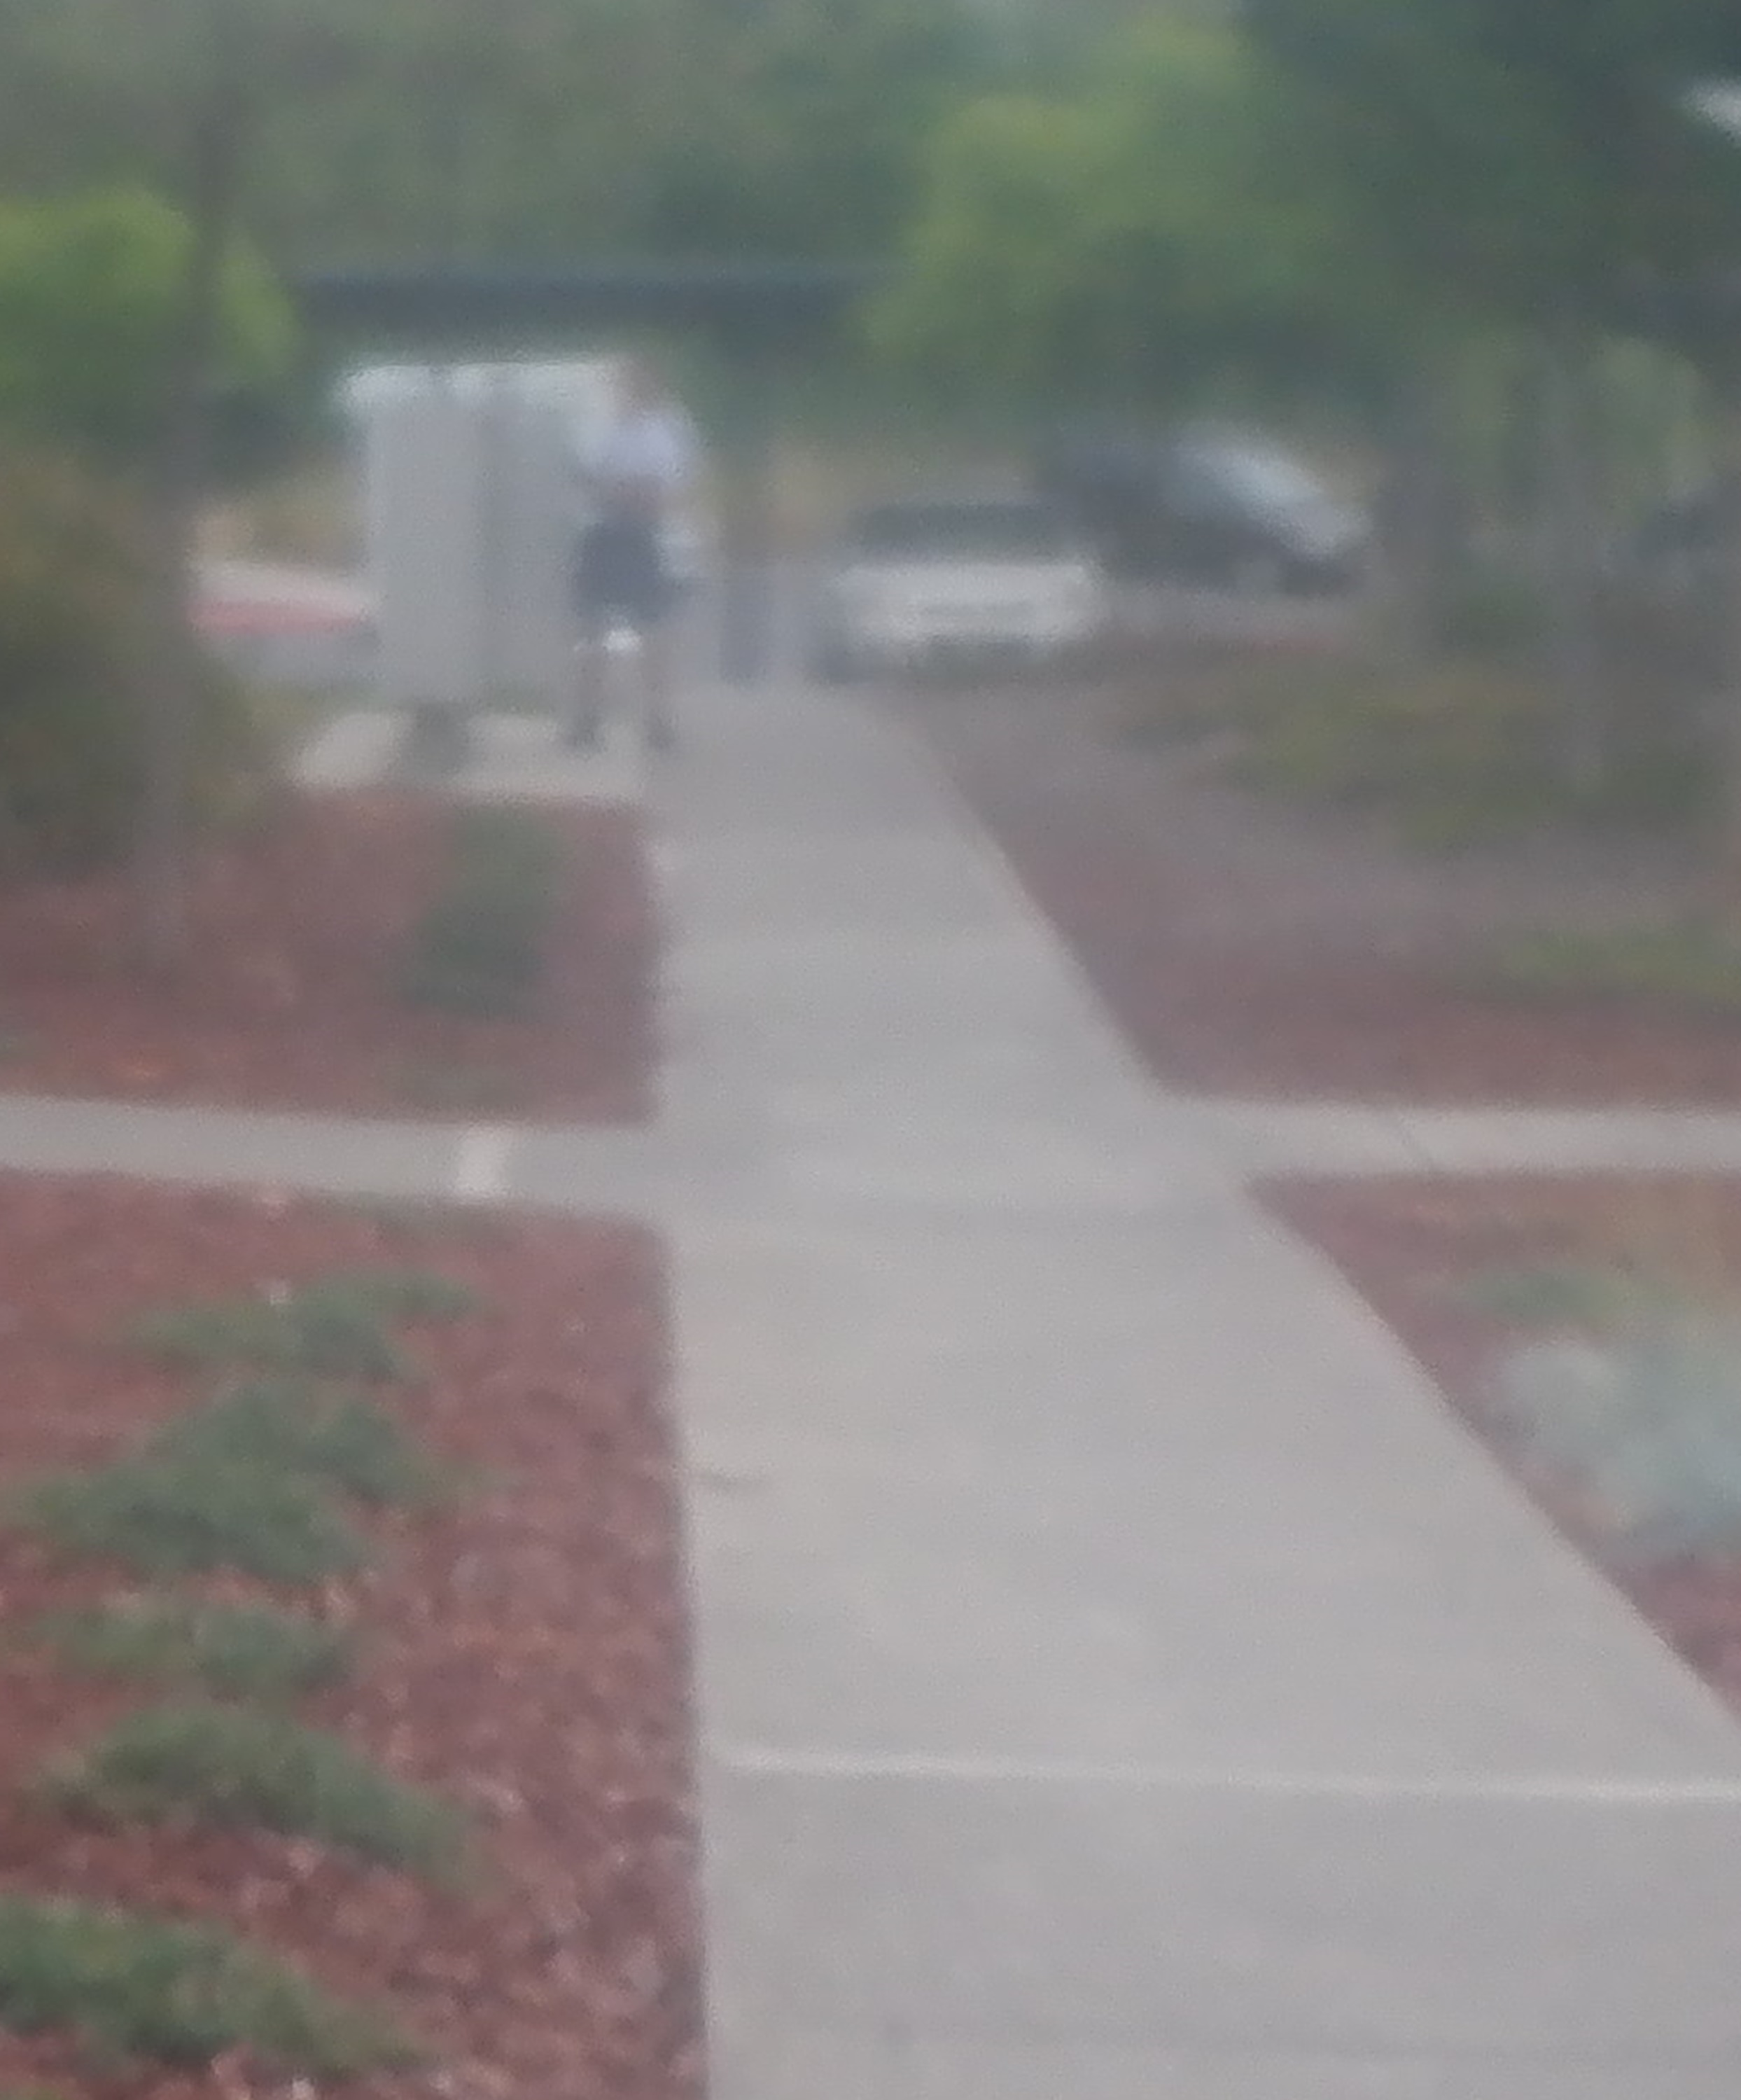 Photo I took when I saw the mailman on my walk